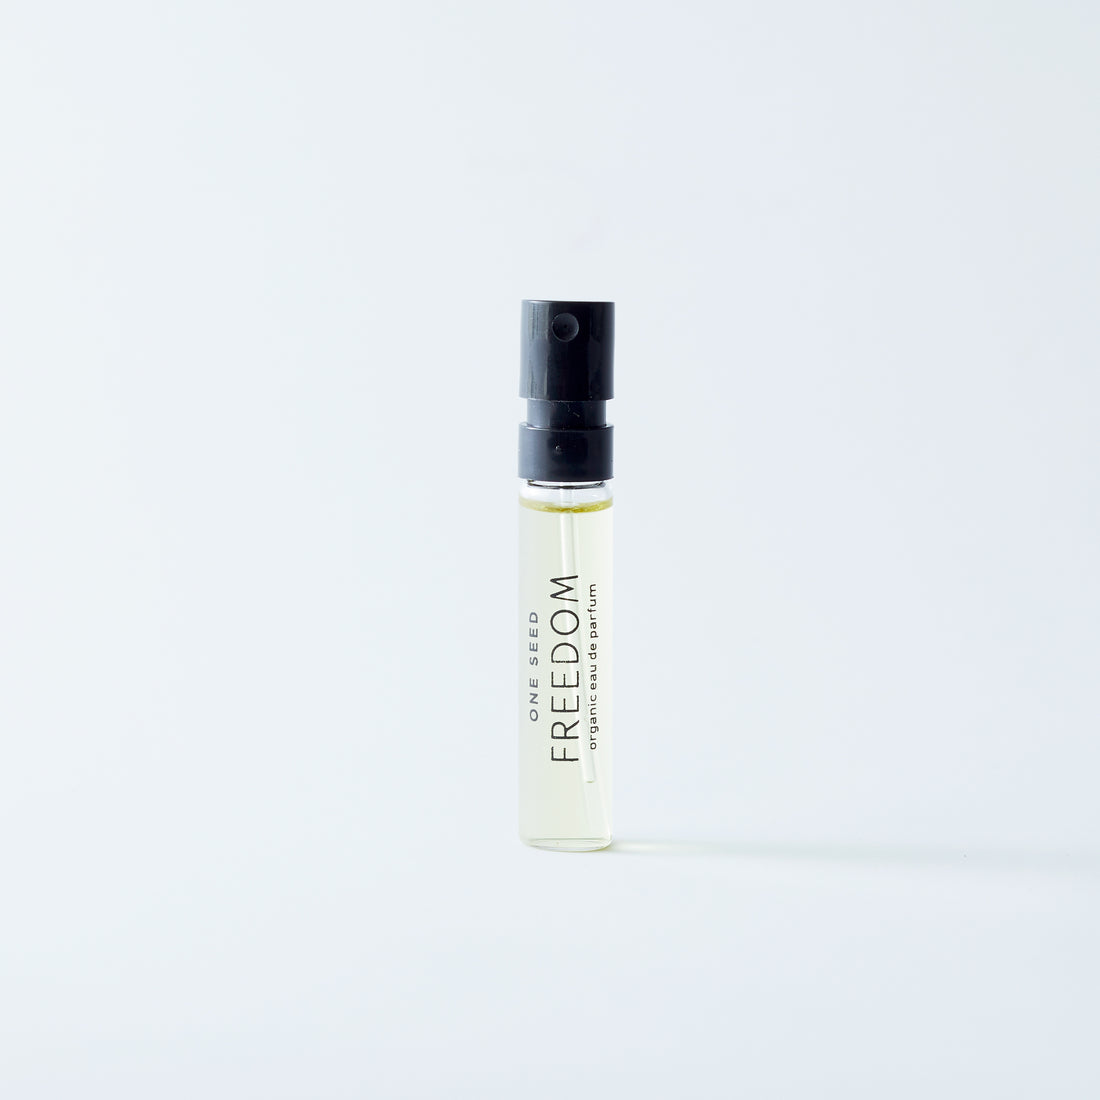 Natural perfume One Seed Freedom in 2ml sample